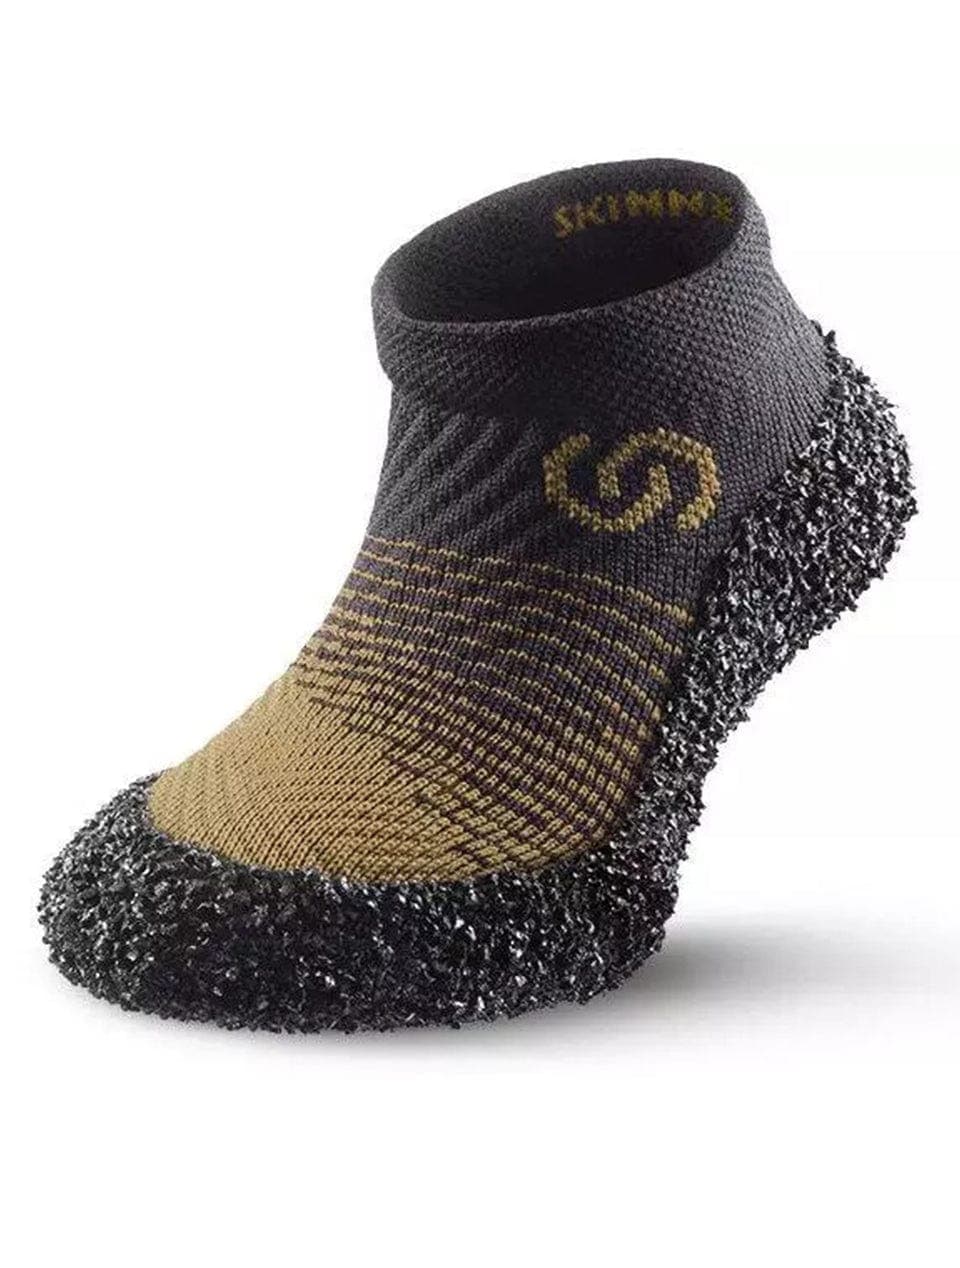 PRSAE (EUR 26-27) Skinners 2.0 Minimalist Kids Footwear - Moss